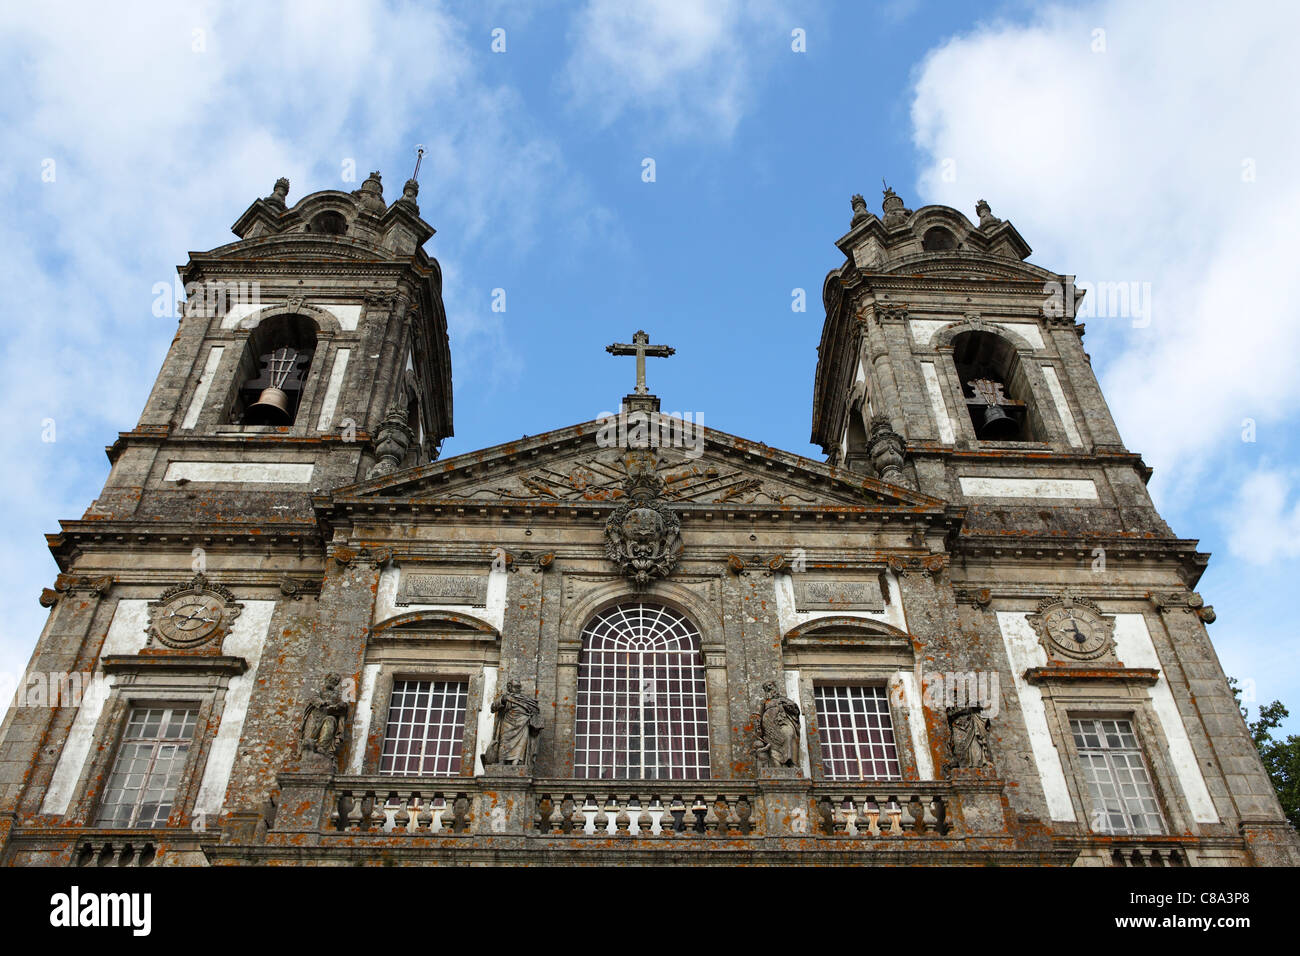 The facade of the Bom Jesus do Monte in Braga, Portugal. Stock Photo